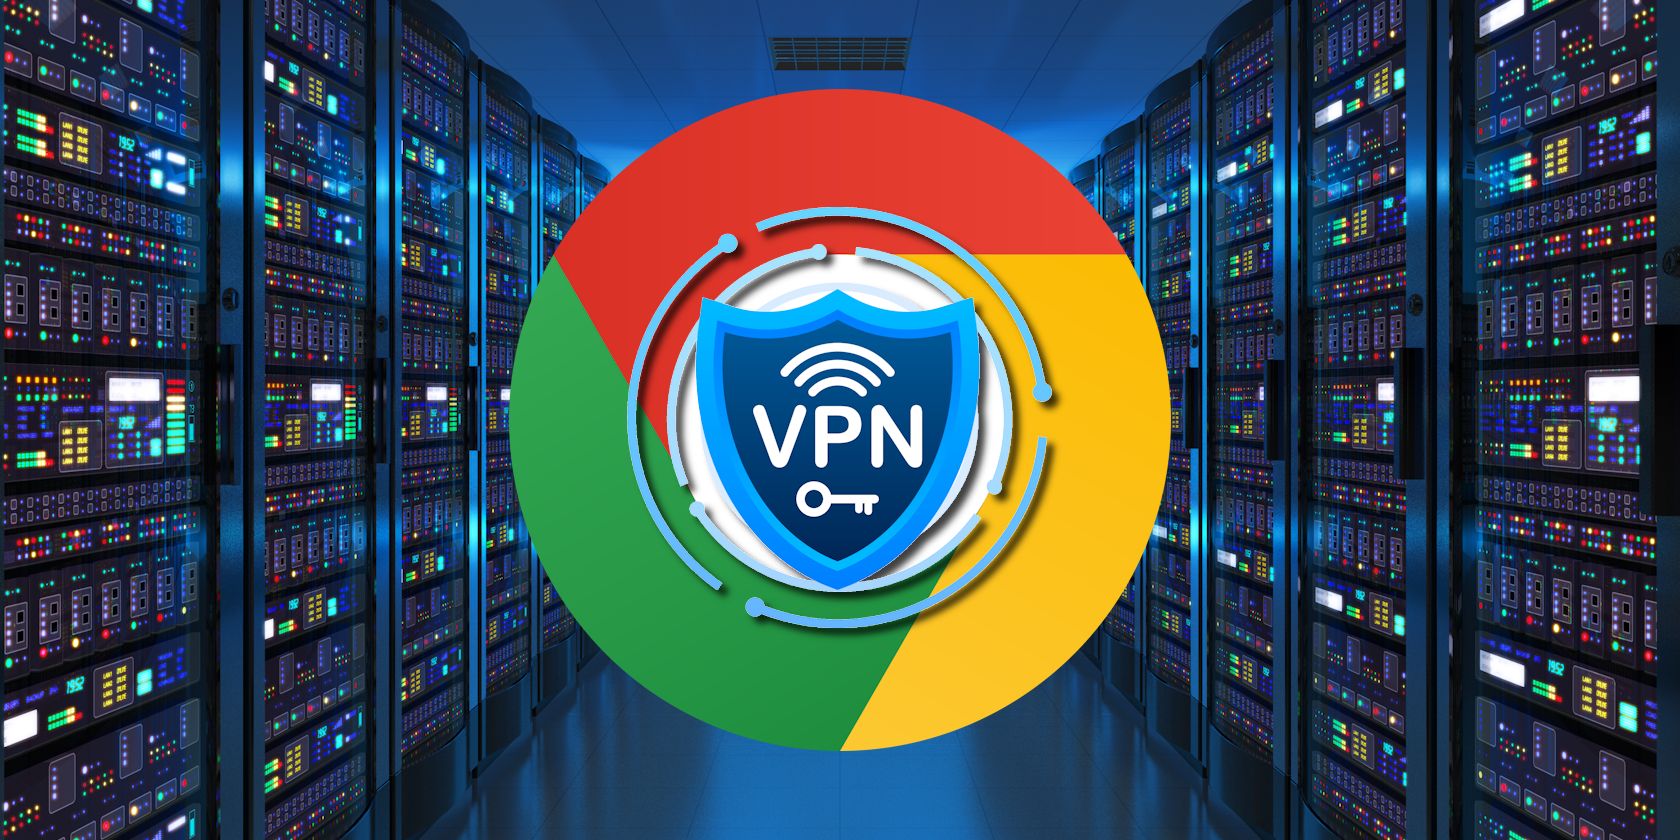 google chrome logo with vpn badge on server room background